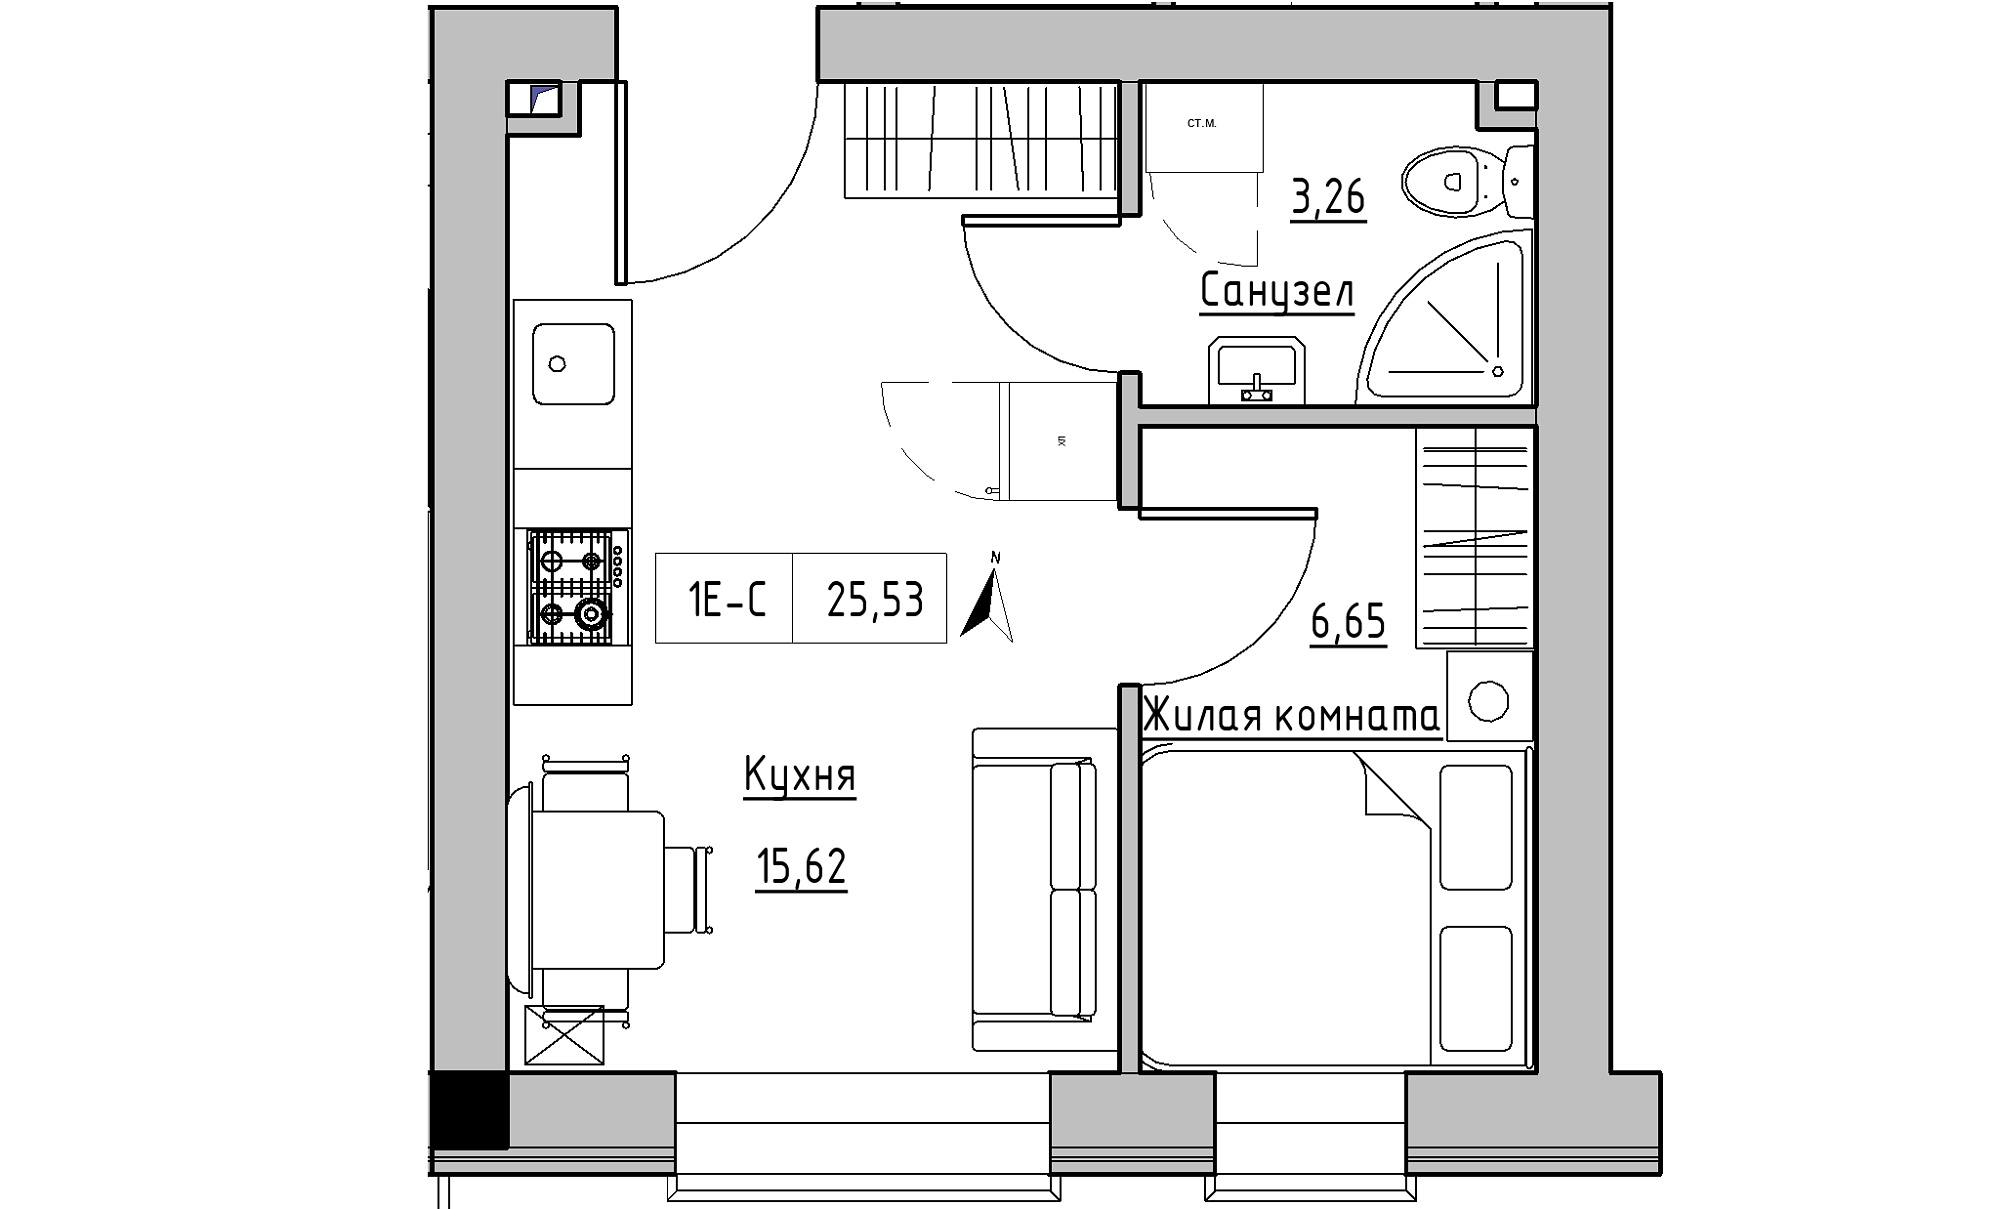 Planning 1-rm flats area 25.53m2, KS-016-03/0004.